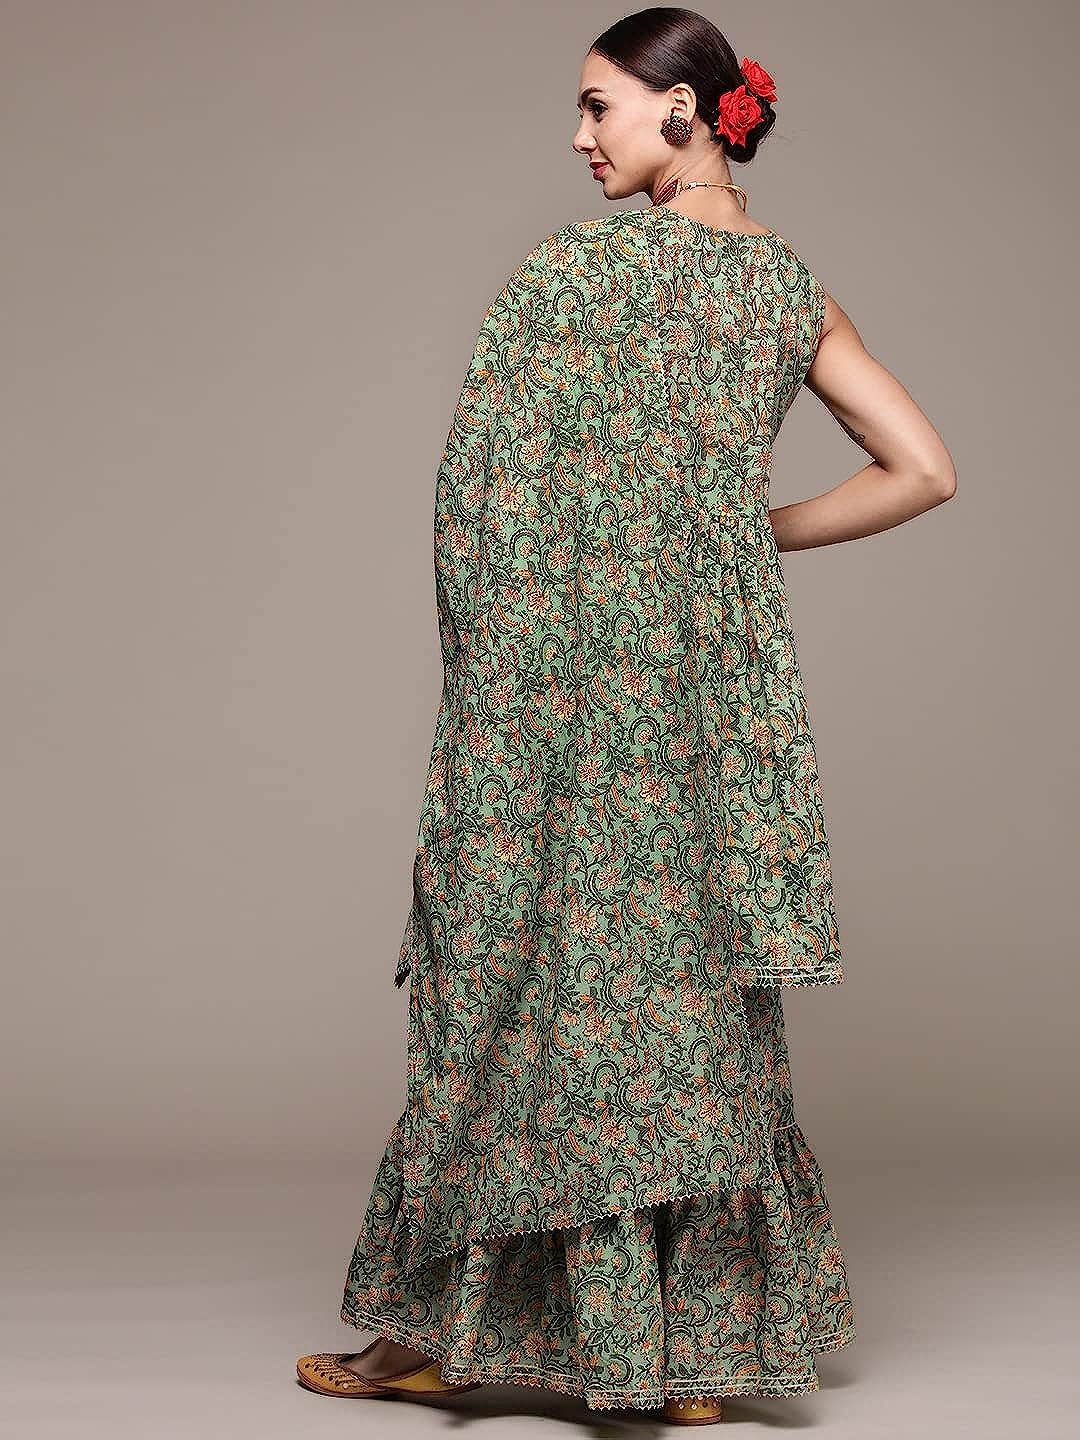 Women's Cotton Green Ethnic Motifs Printed Anarkali Kurta Suit Set with Sharara and Dupatta